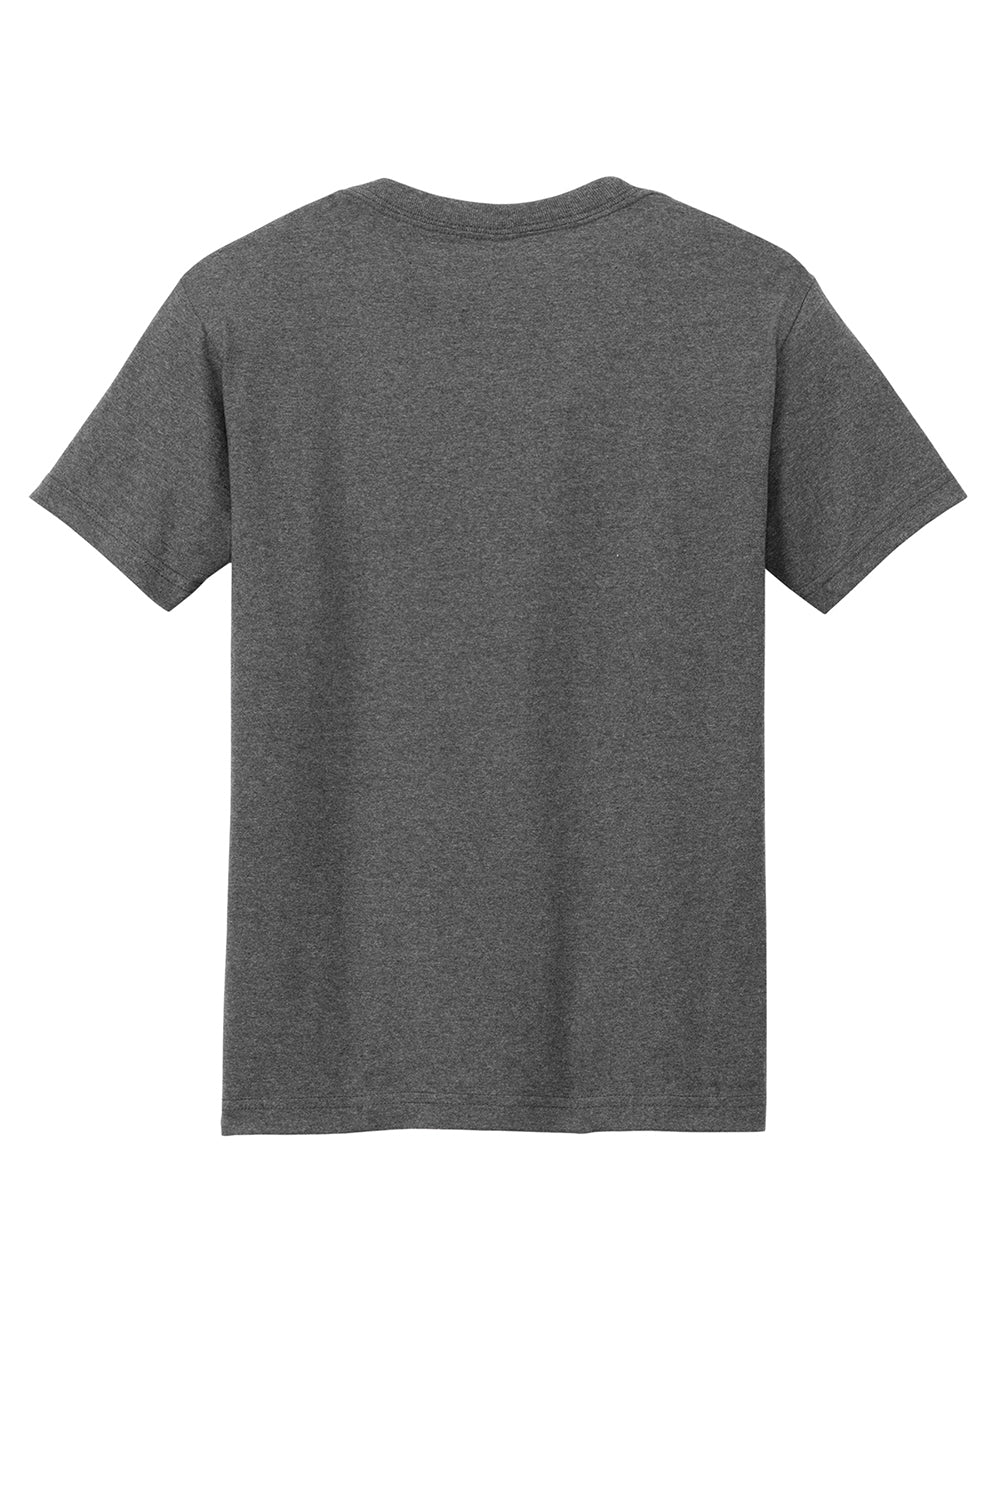 American Apparel 1301/AL1301 Mens Short Sleeve Crewneck T-Shirt Heather Charcoal Grey Flat Back